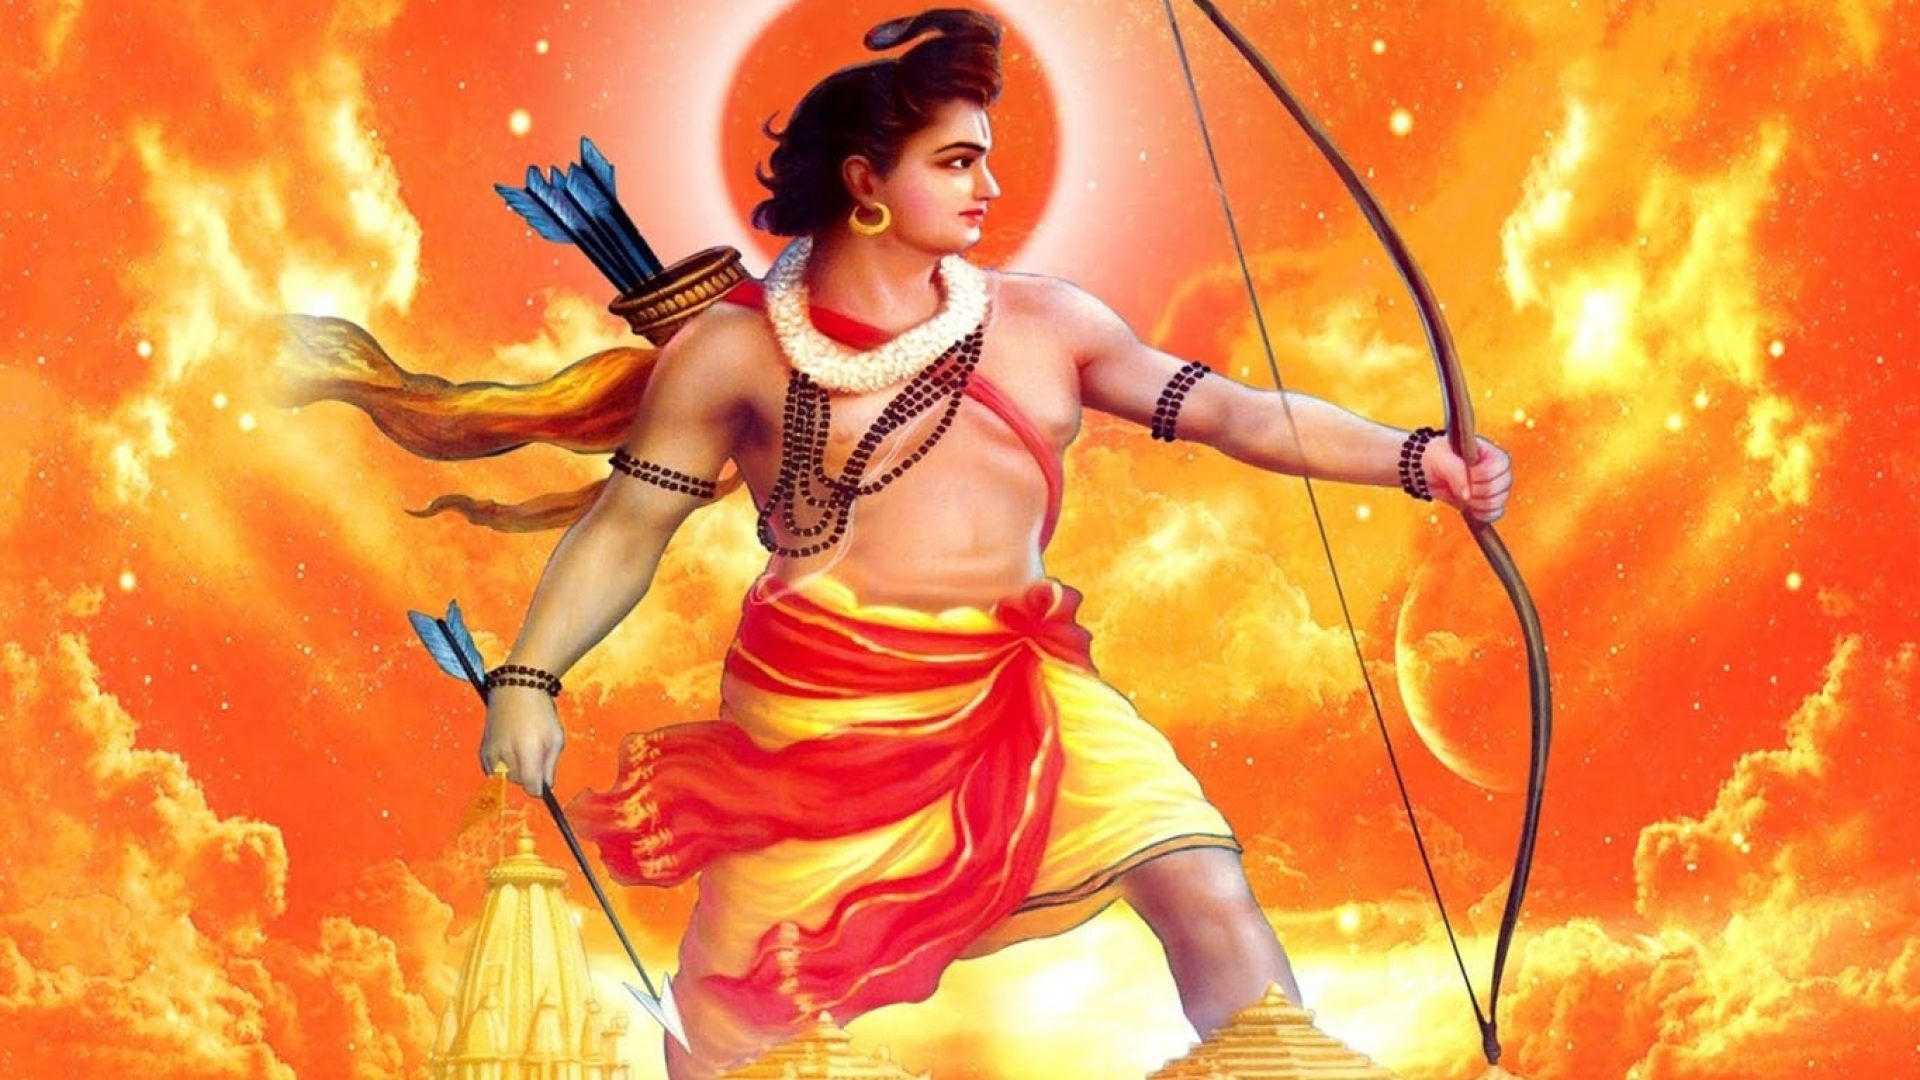 Jai Shree Ram Image HD. Hindu Gods and Goddesses